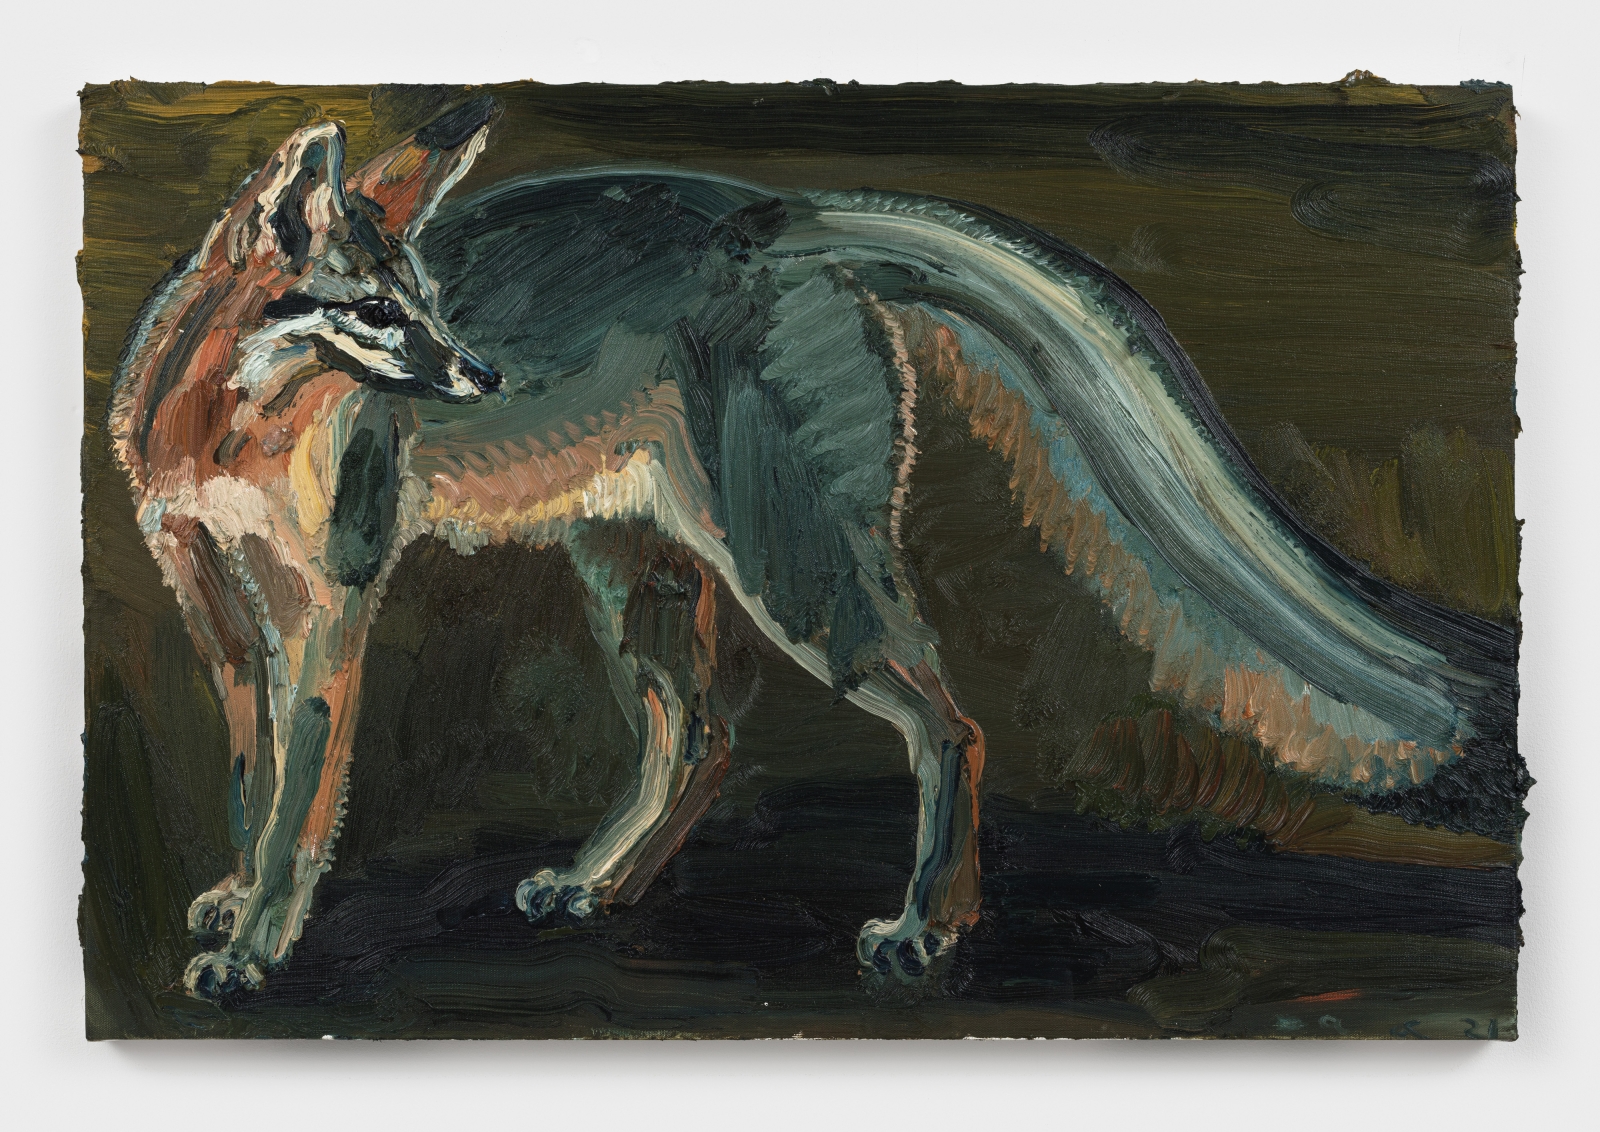 Allison Schulnik
Night Fox #2, 2021
oil on canvas stretched over board
24 x 36 ins.
61 x 91.4 cm